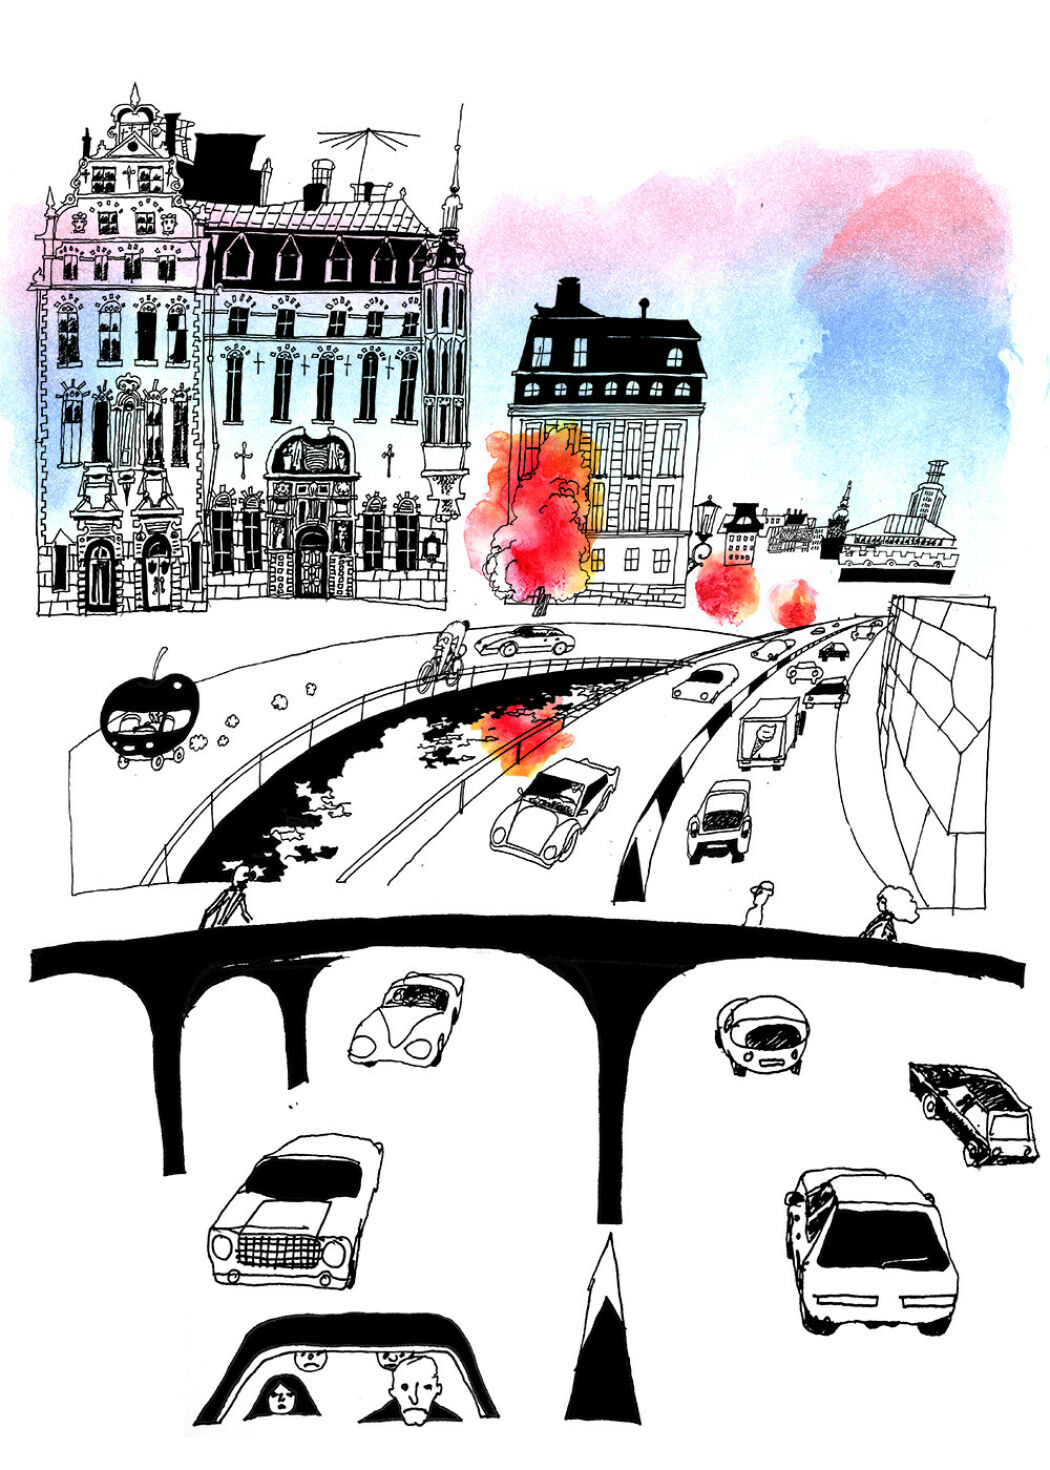 Editorial illustrations by Dennis Eriksson